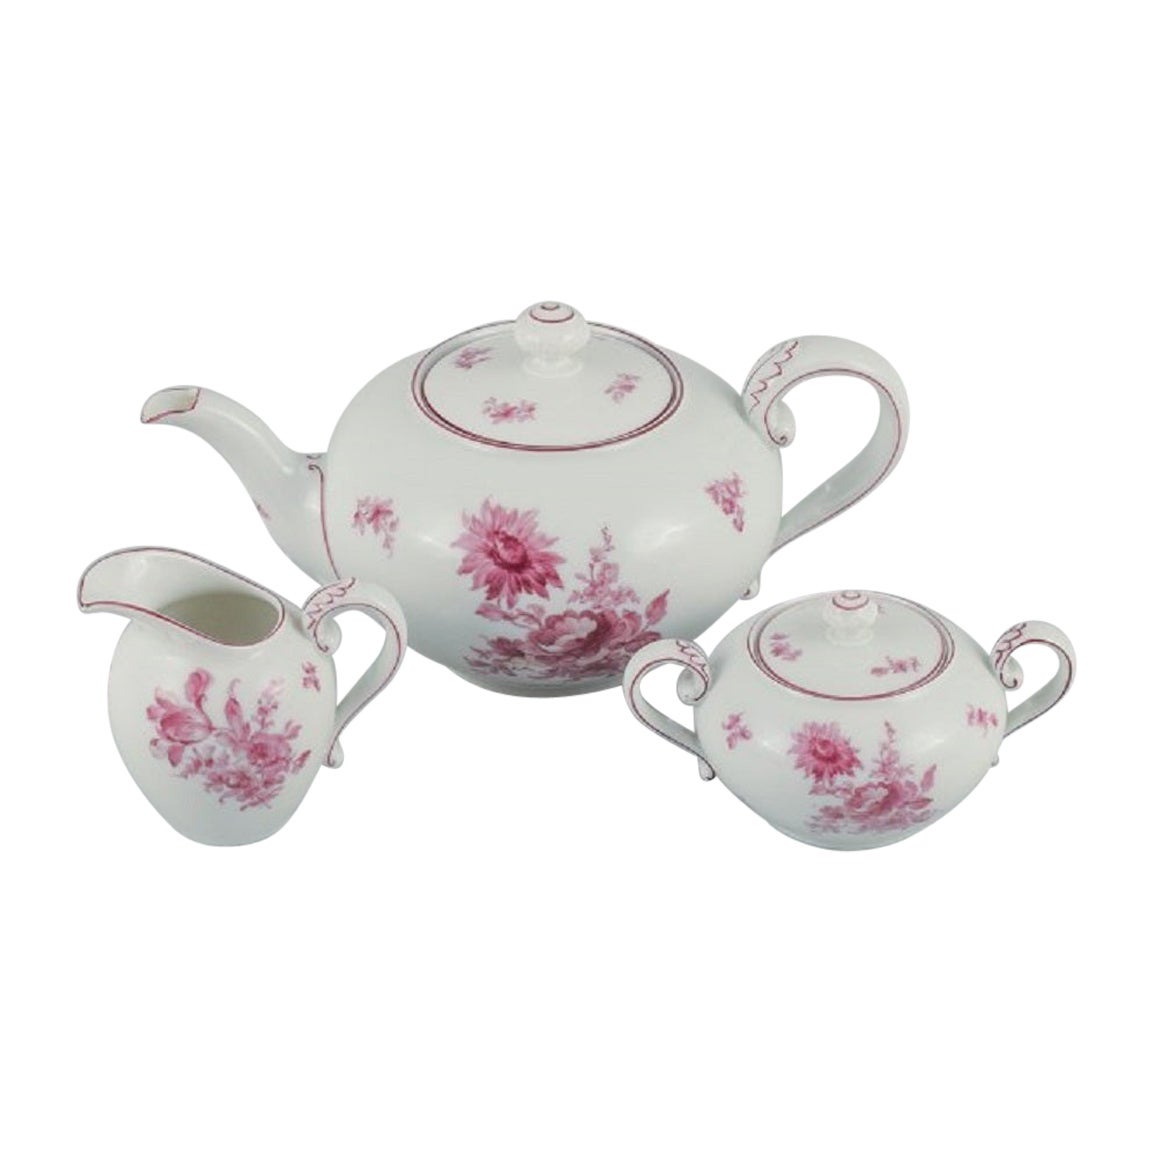 Rosenthal, Porcelain Tea Set Consisting of Teapot, Creamer and Sugar Bowl For Sale